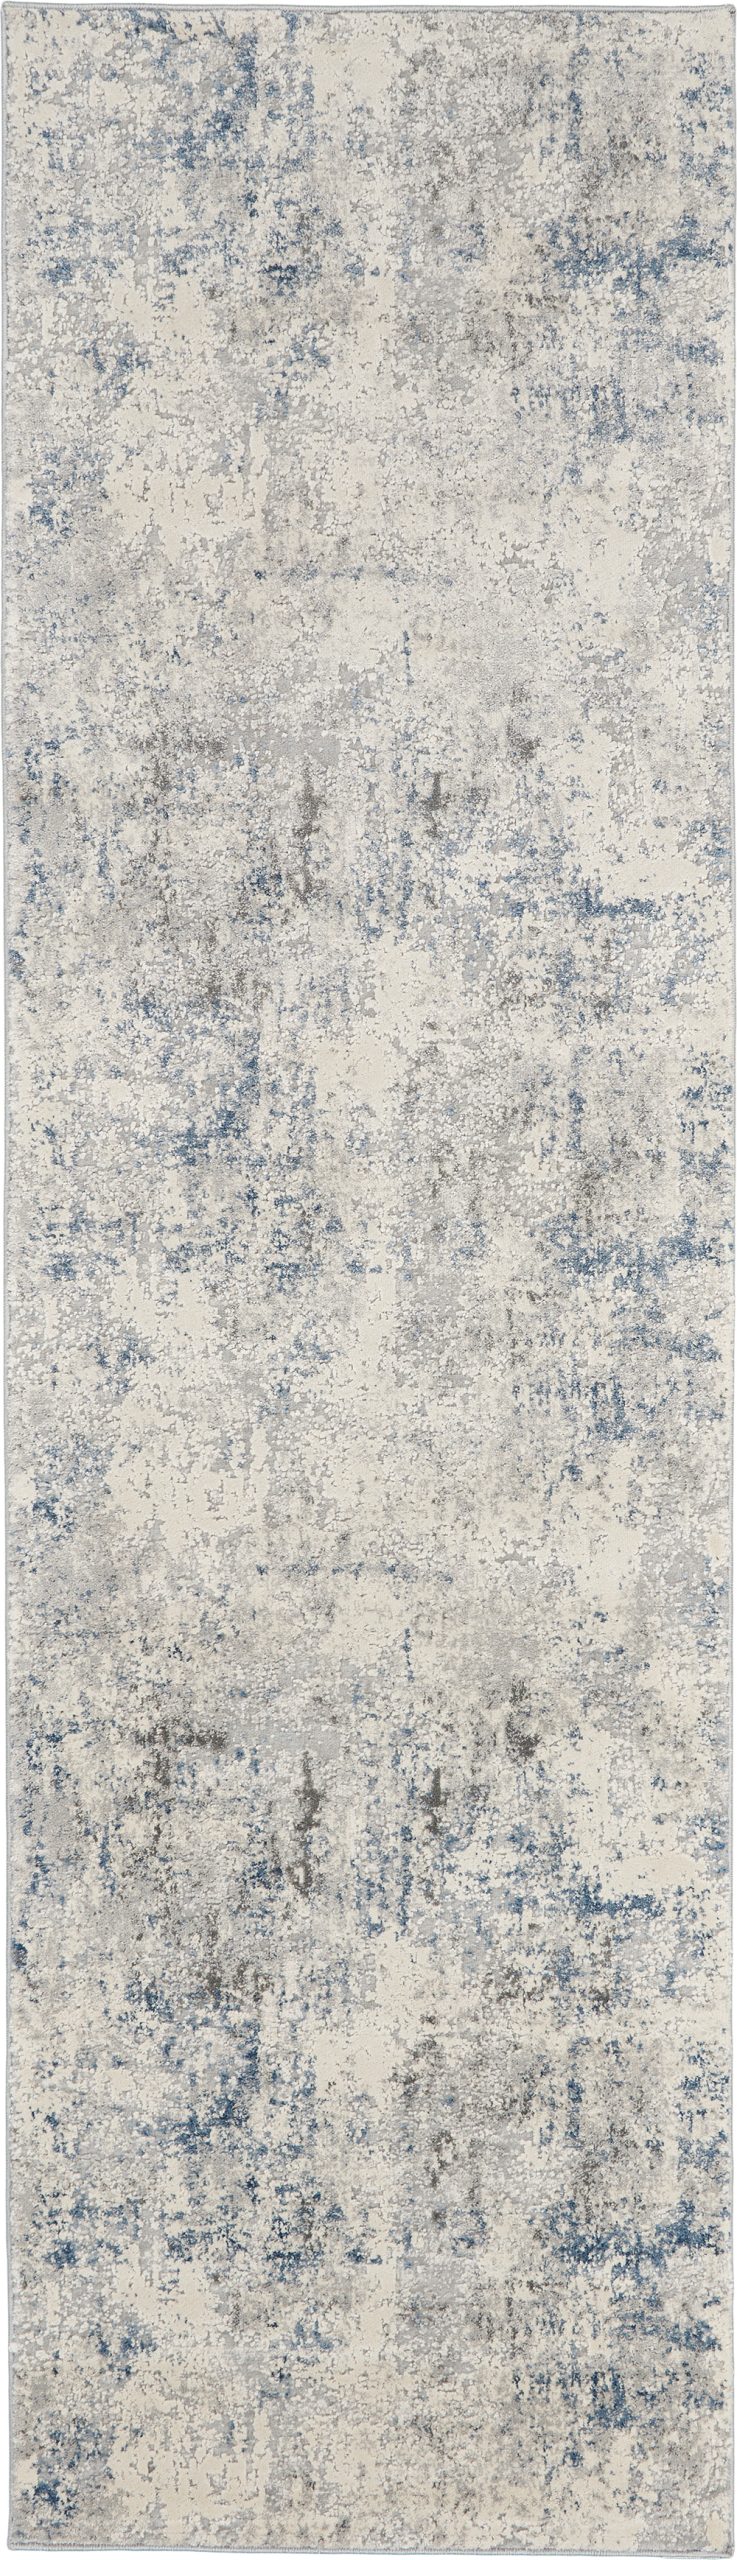 Nourison Rugs - Rustic Textures Runner RUS07 Rug in Ivory Grey Beige - 2.3m x 0.66m